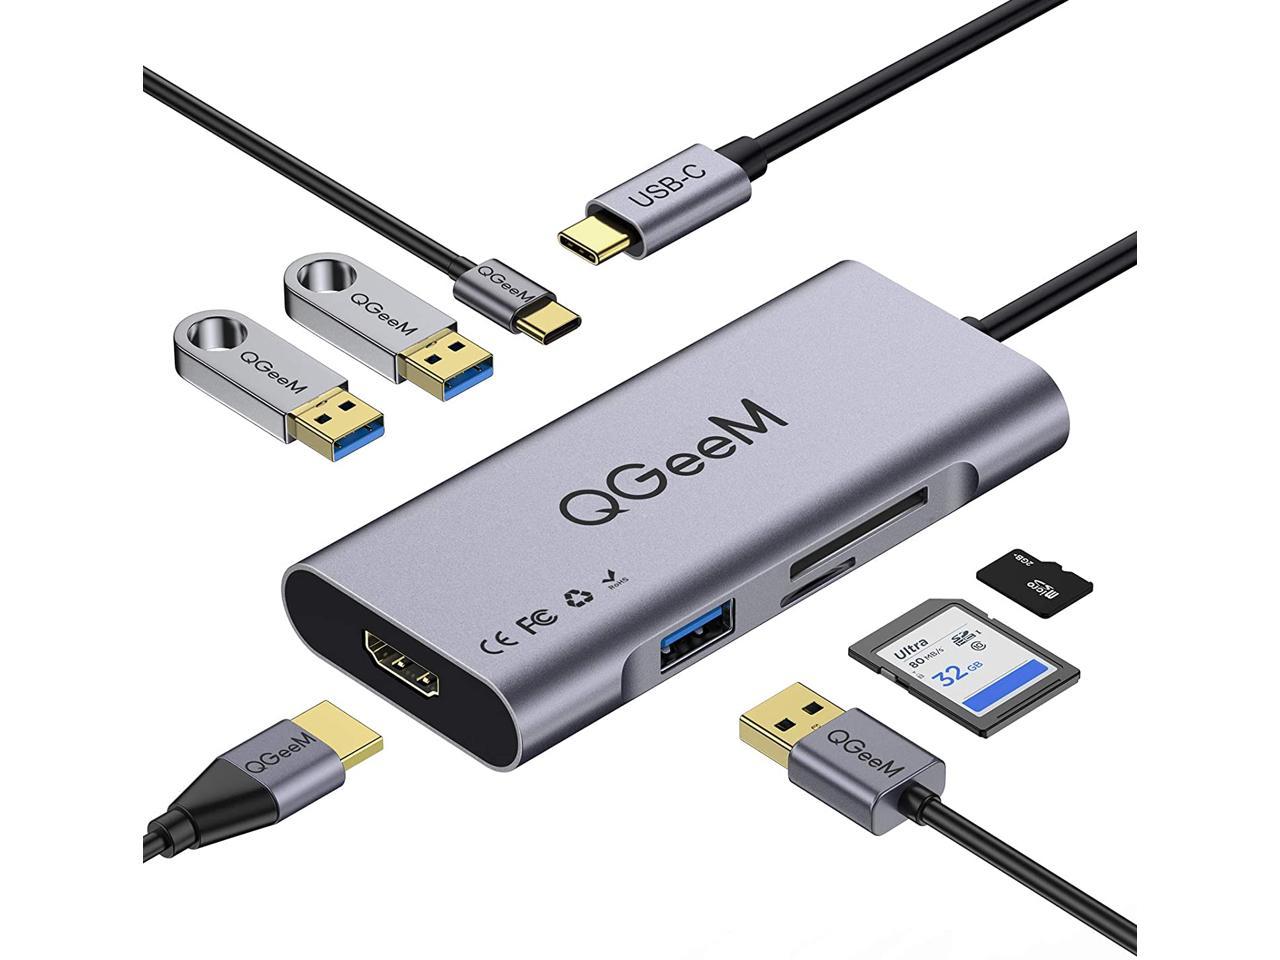 QGeeM 7-in-1 USB Type C-Hub [HDMI 4k Adapter, 3 USB 3.0 Ports, SD/TF Card Reader] $18.19